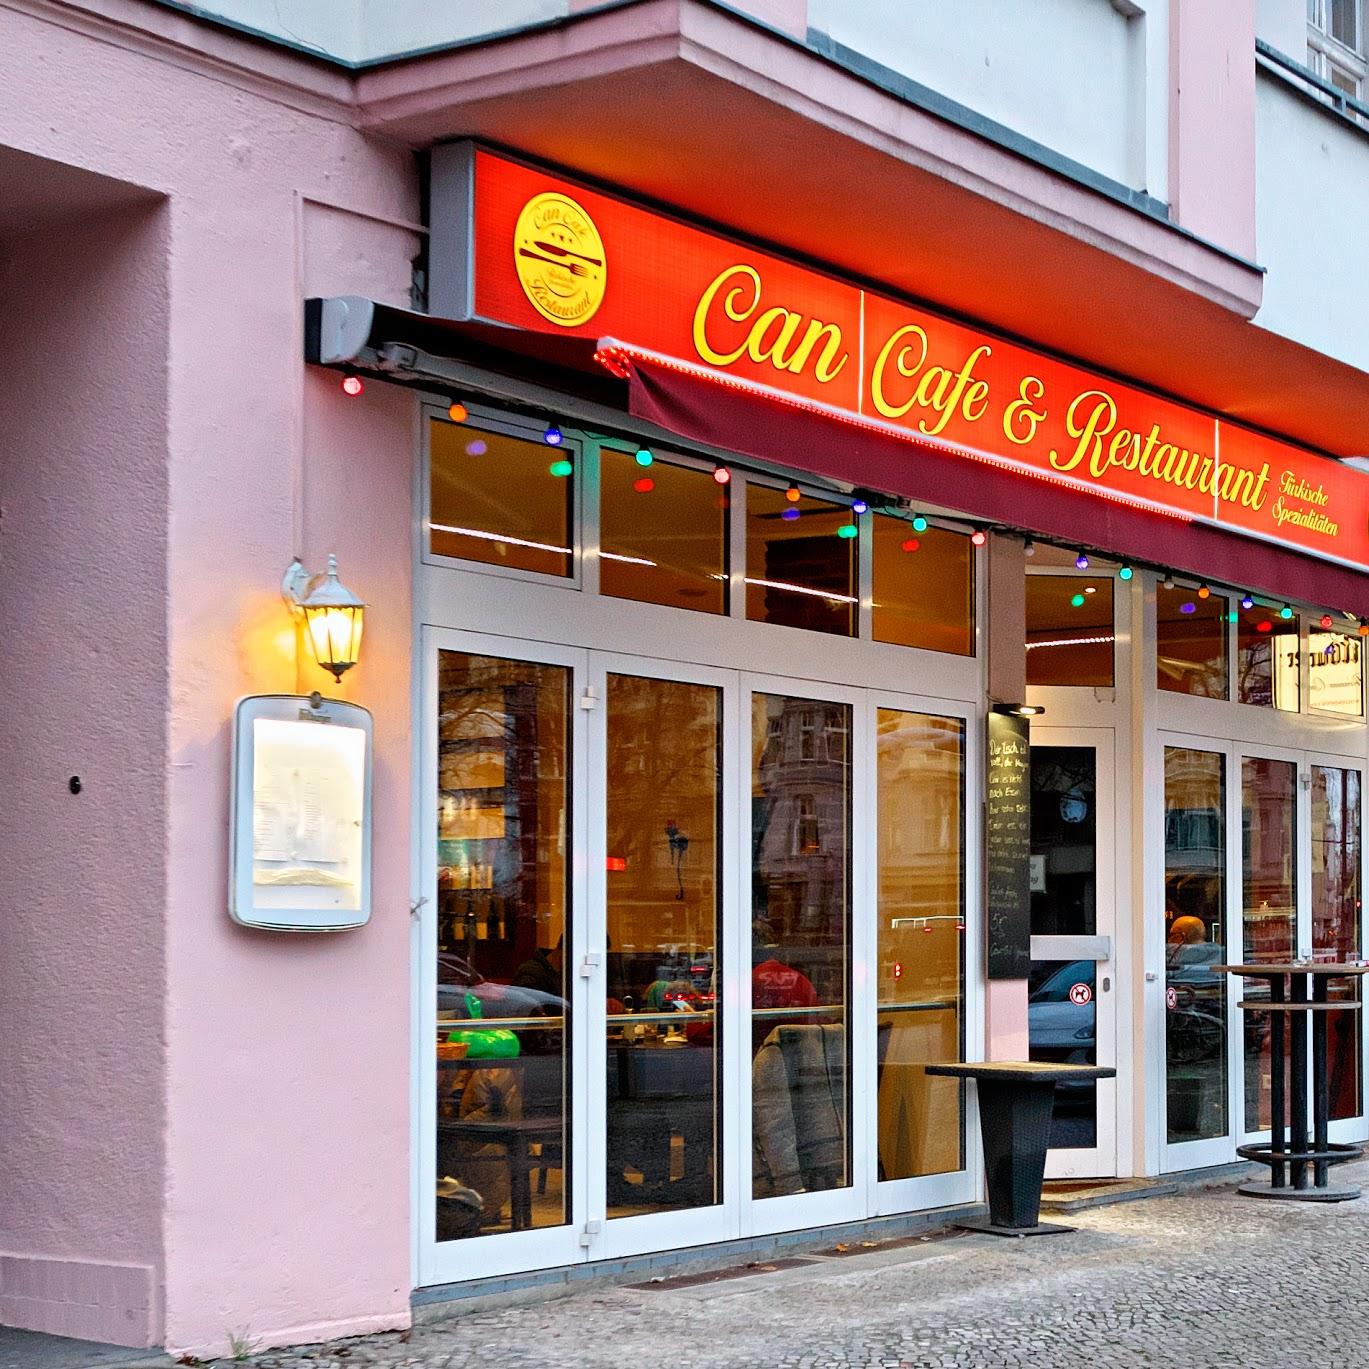 Restaurant "Can Café Restaurant" in Berlin